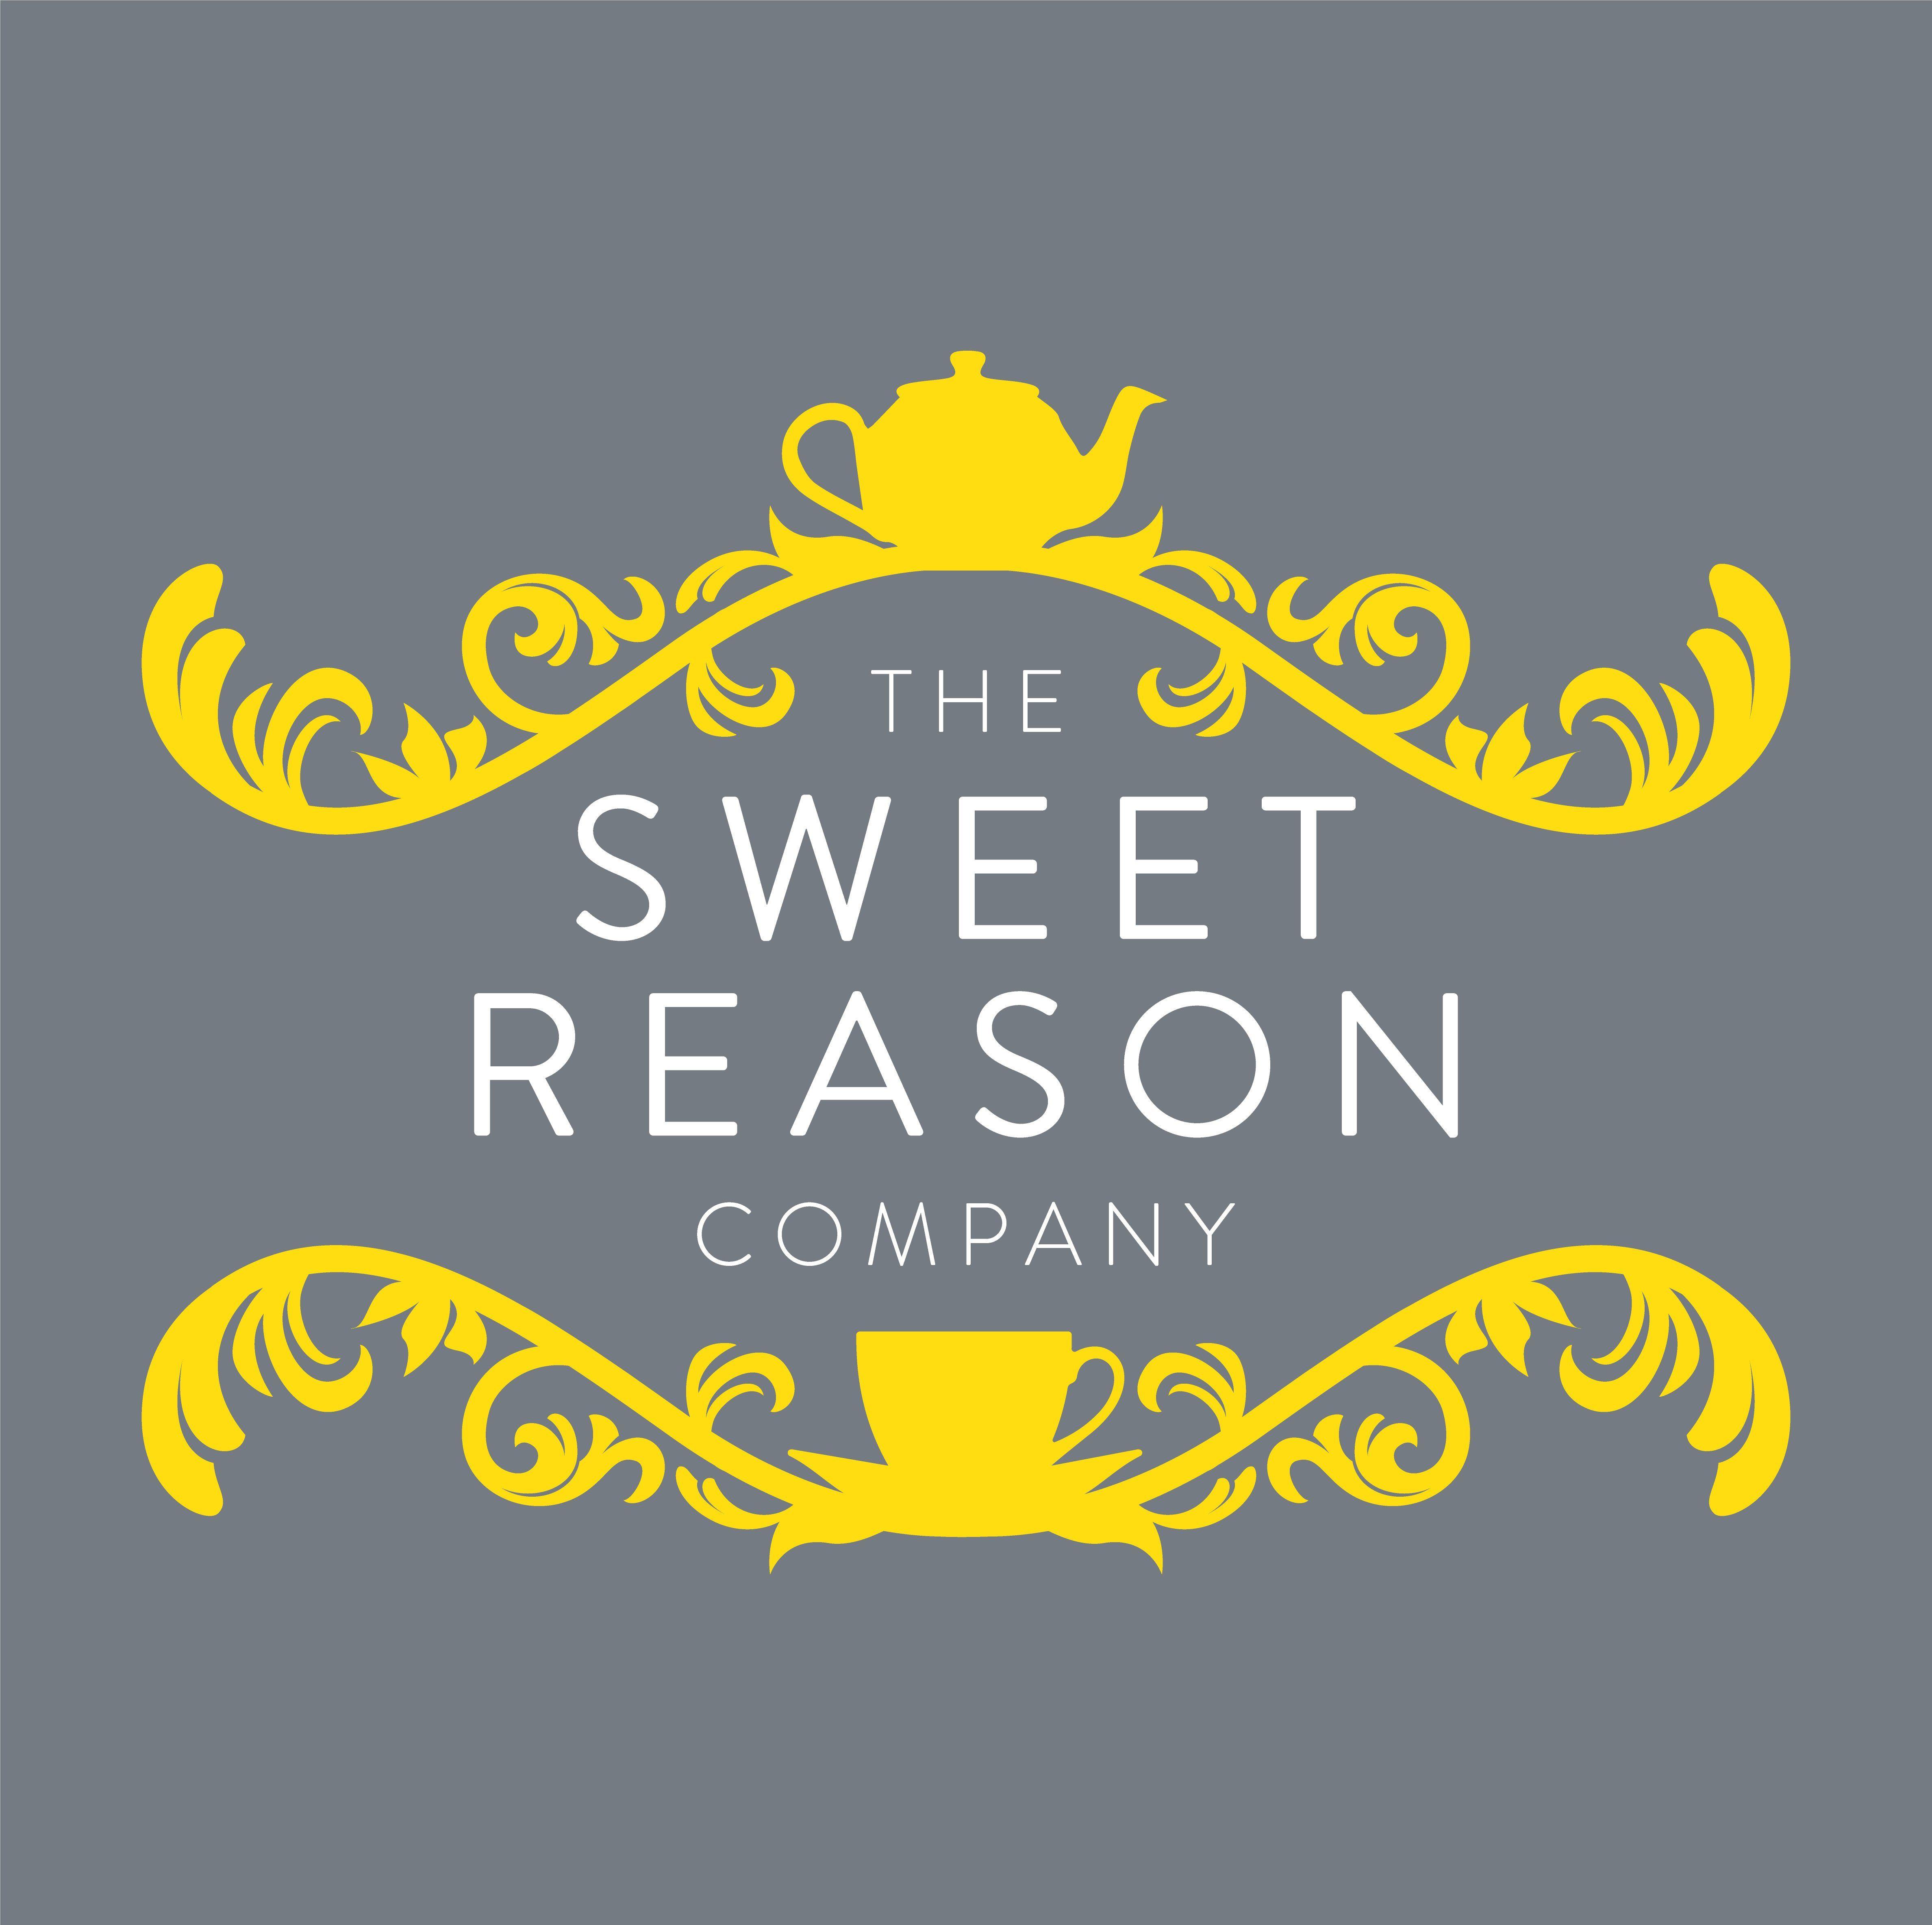 Reason.com Logo - About Us. The Sweet Reason Company